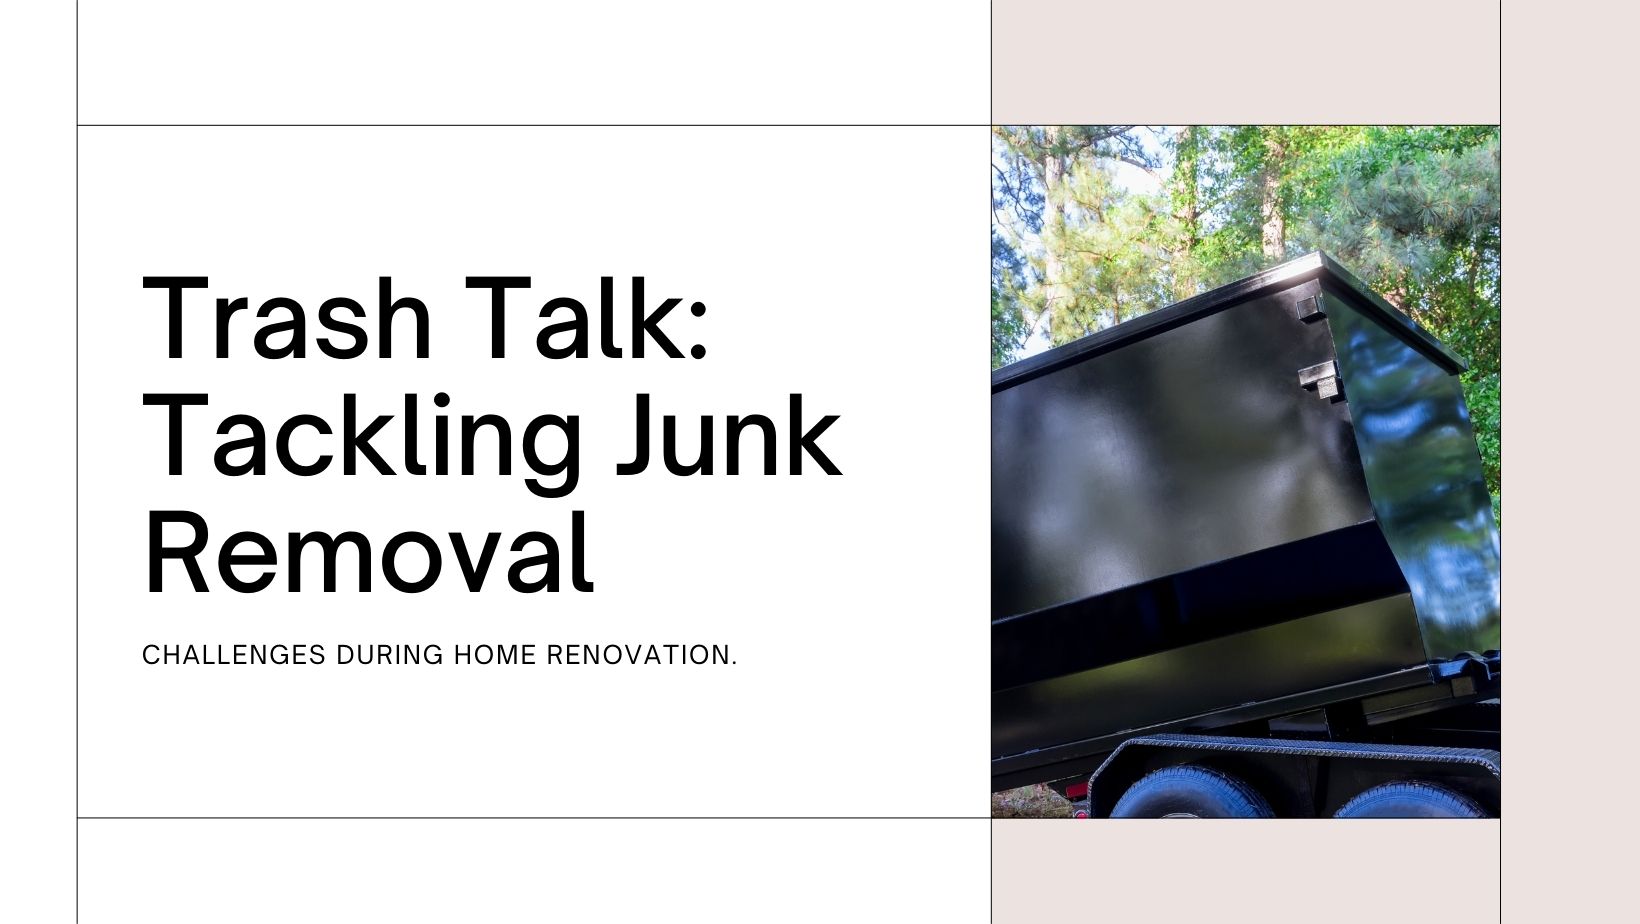 Trash Talk Tackling Junk Removal Challenges in Home Renovation